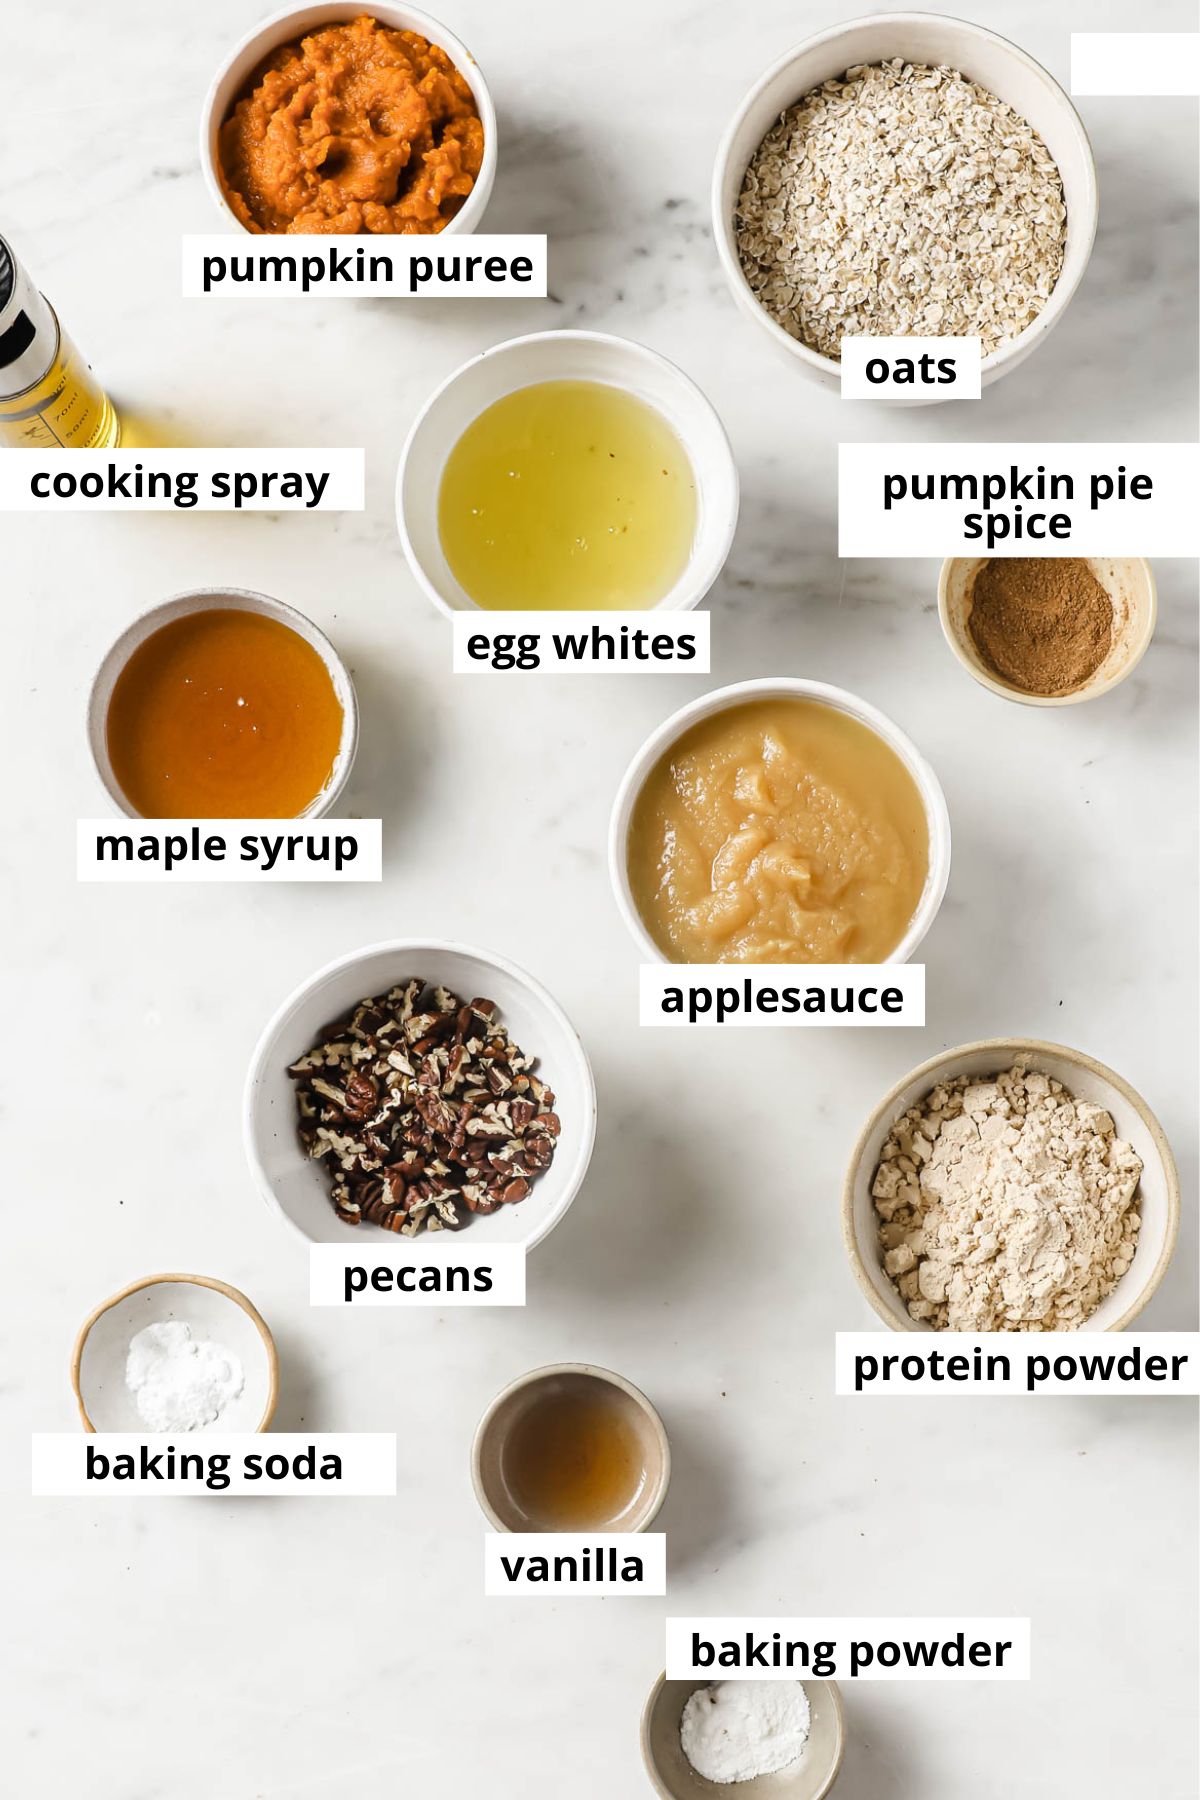 Pumpkin, oats, applesauce, maple syrup, protein powder, egg whites, pumpkin pie spice, pecans, baking powder and soda, vanilla extract, cooking spray.